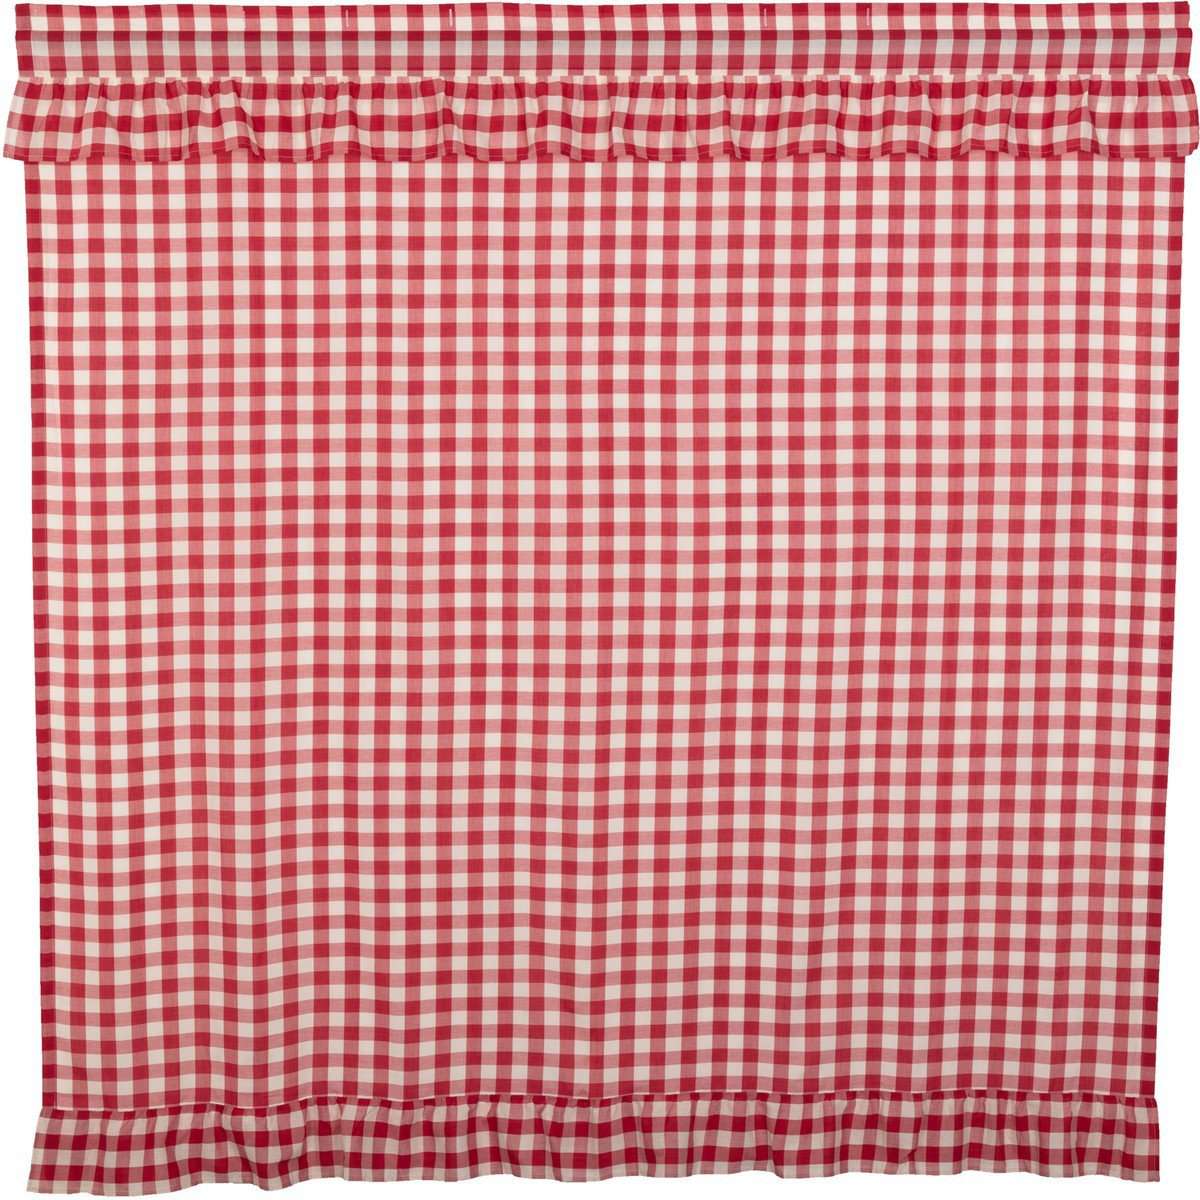 Annie Buffalo Black/Red Check Ruffled Shower Curtain 72"x72" curtain VHC Brands 